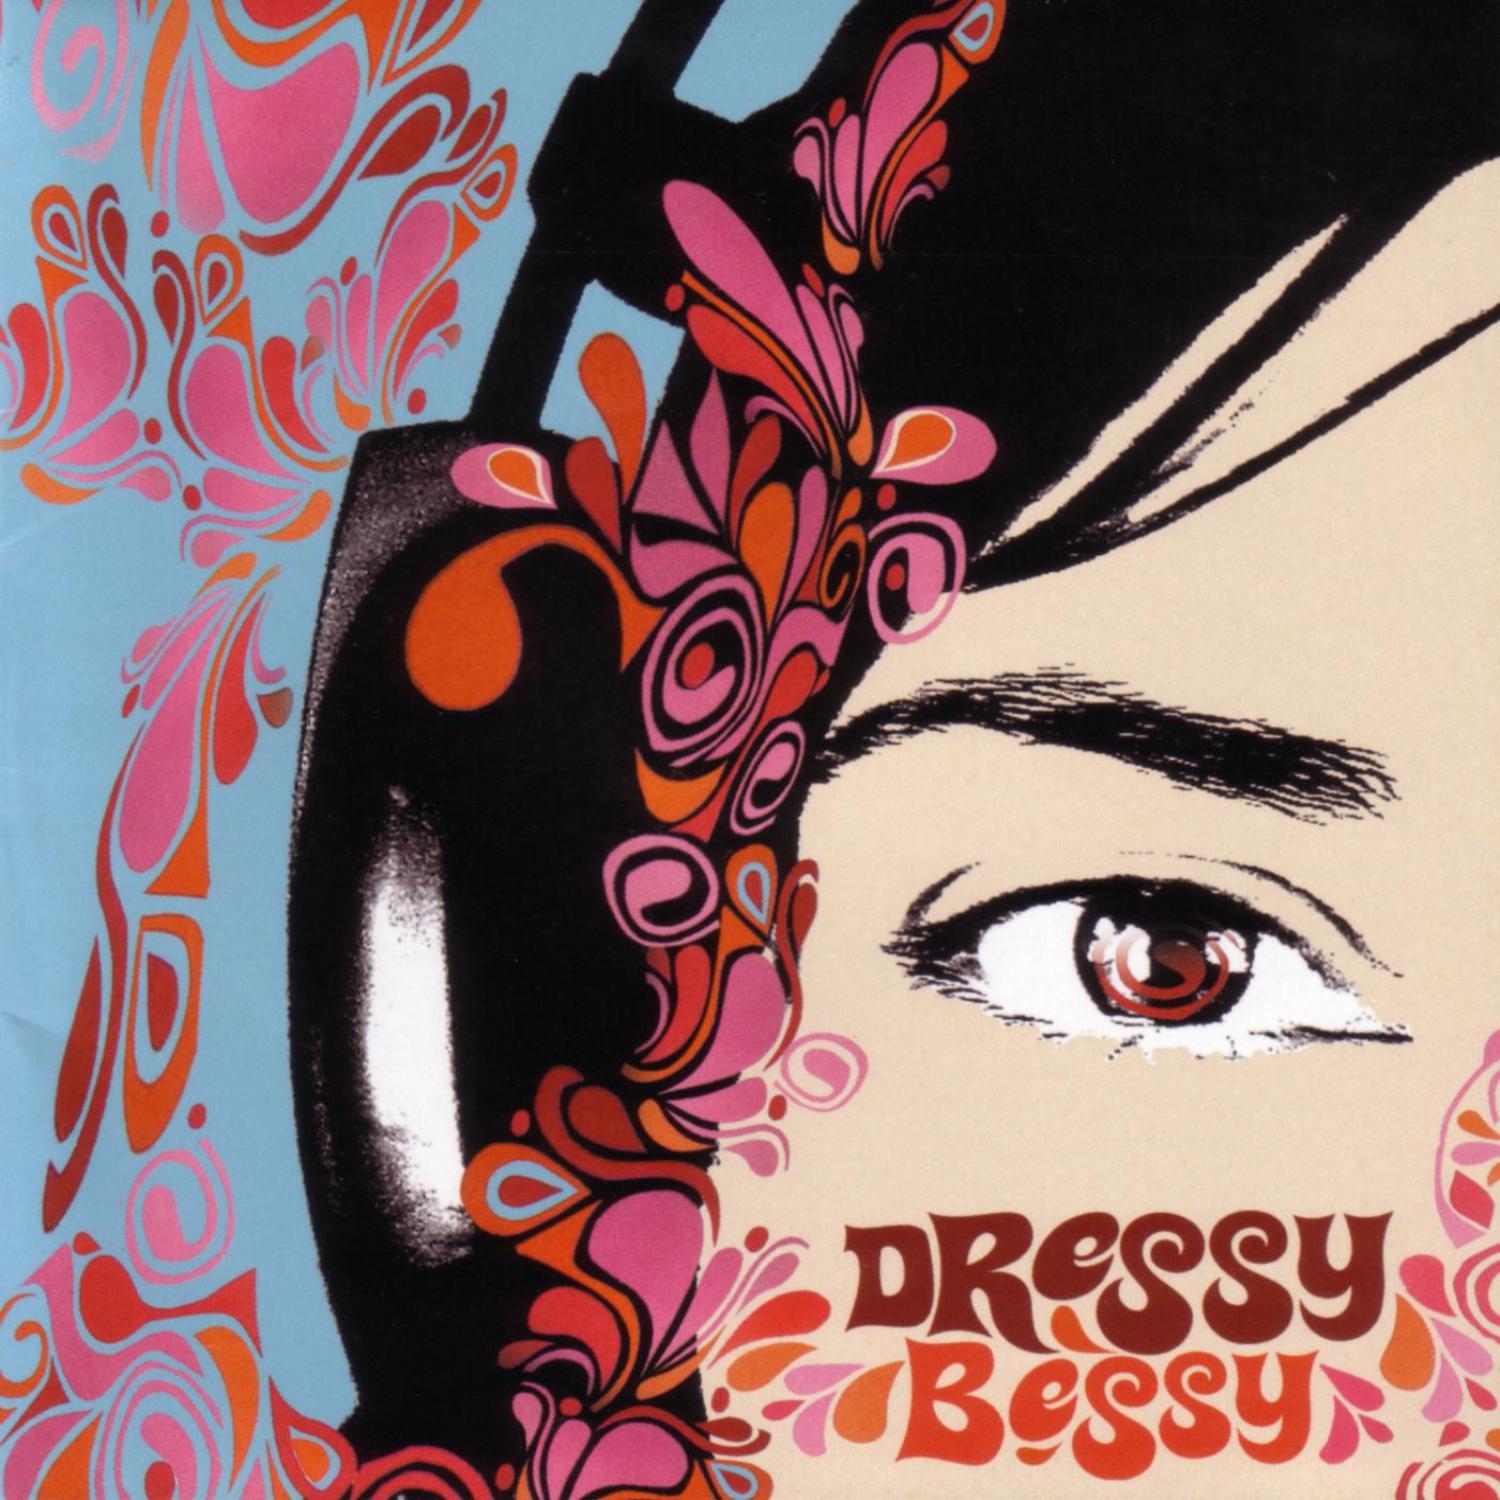 Dressy Bessy - Girl, You Shout!